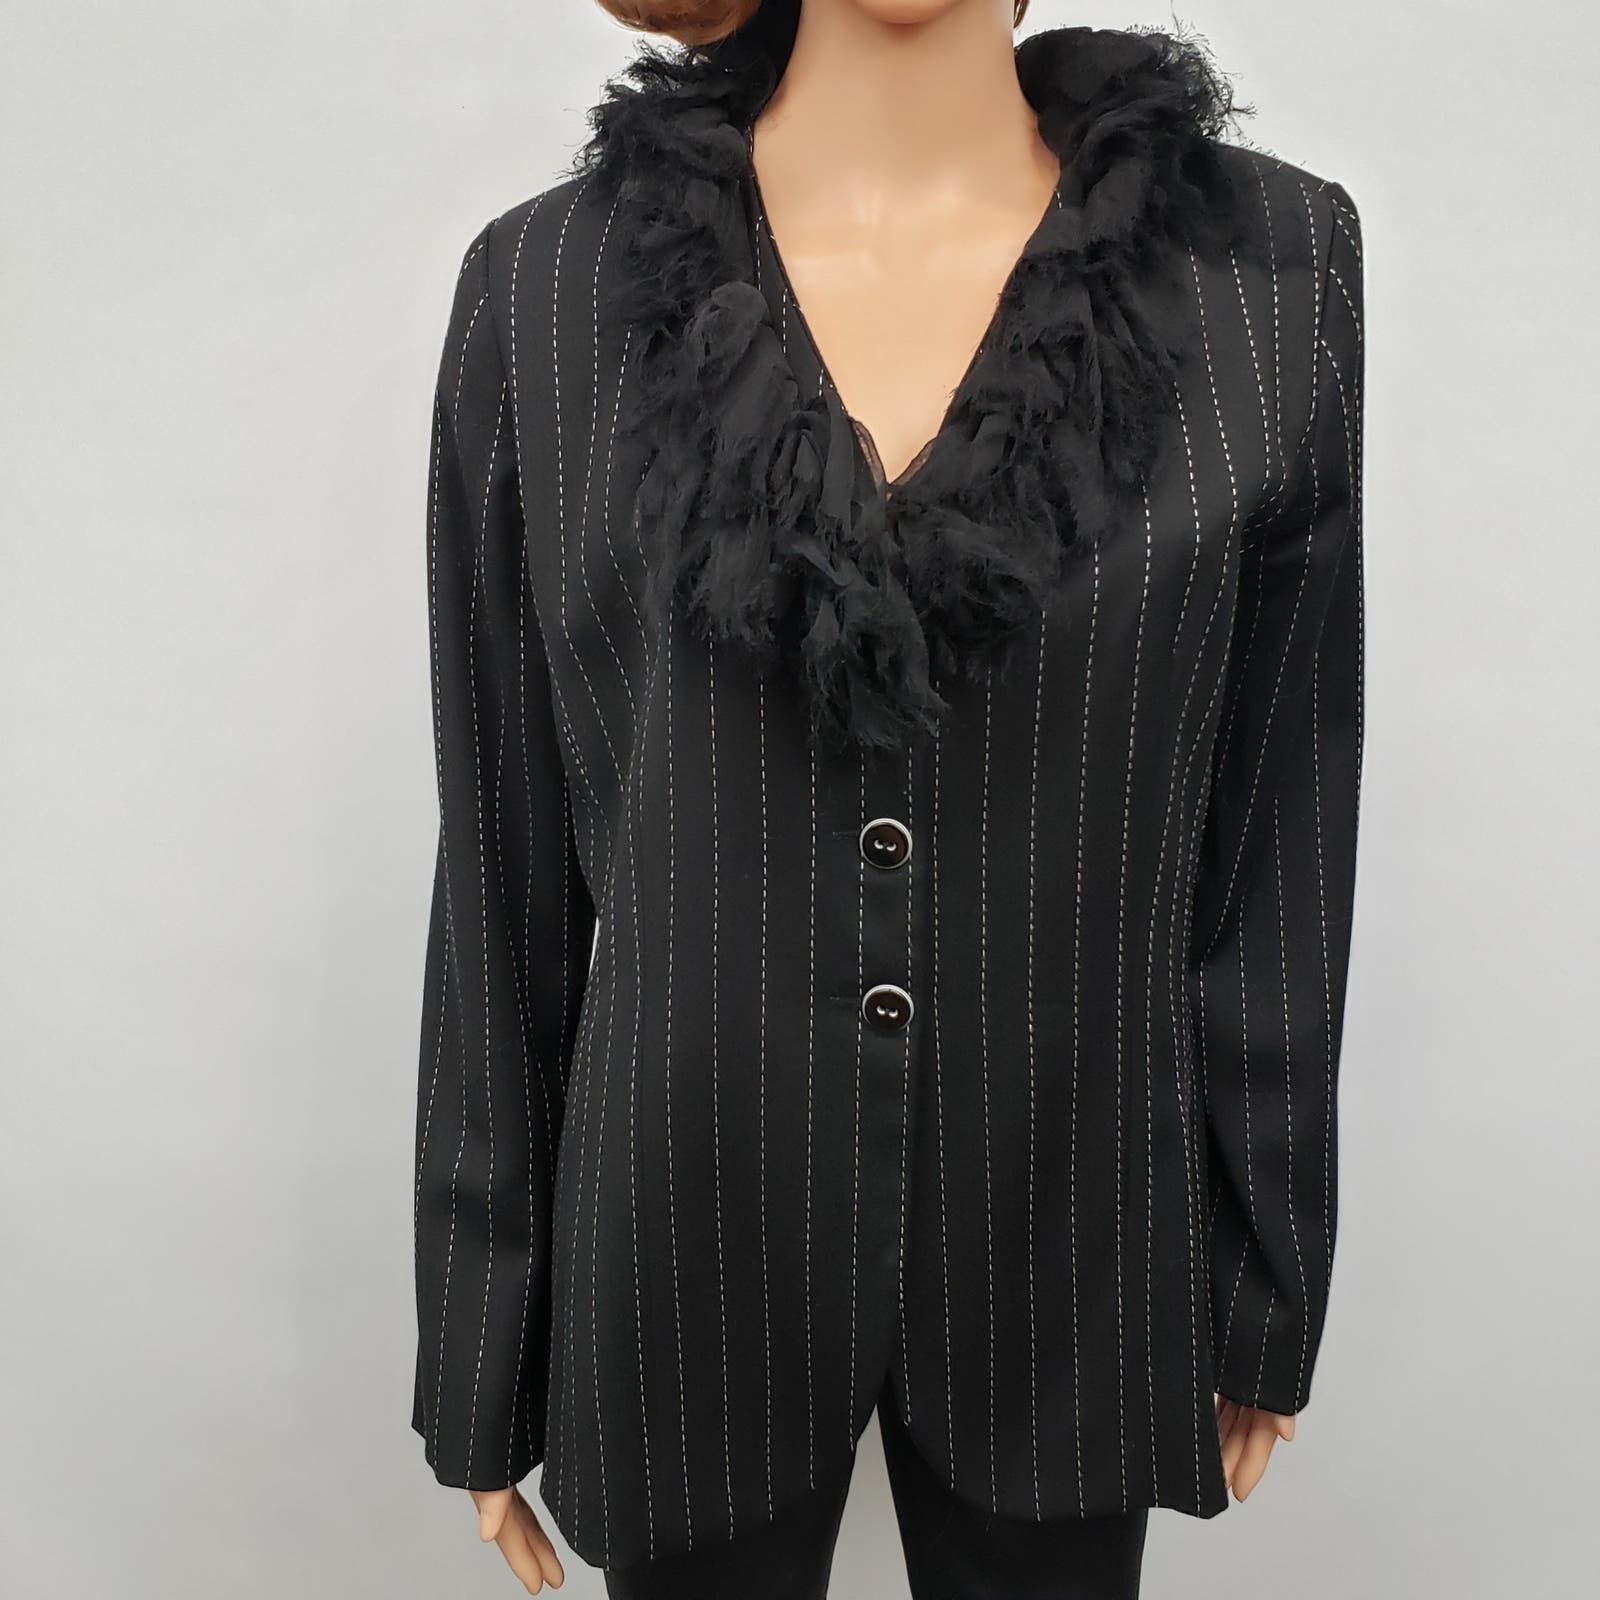 Vintage Pamela Vanderlinde Zone Blazer Jacket Pinstriped Ruffled 8 Size M / US 6-8 / IT 42-44 - 1 Preview